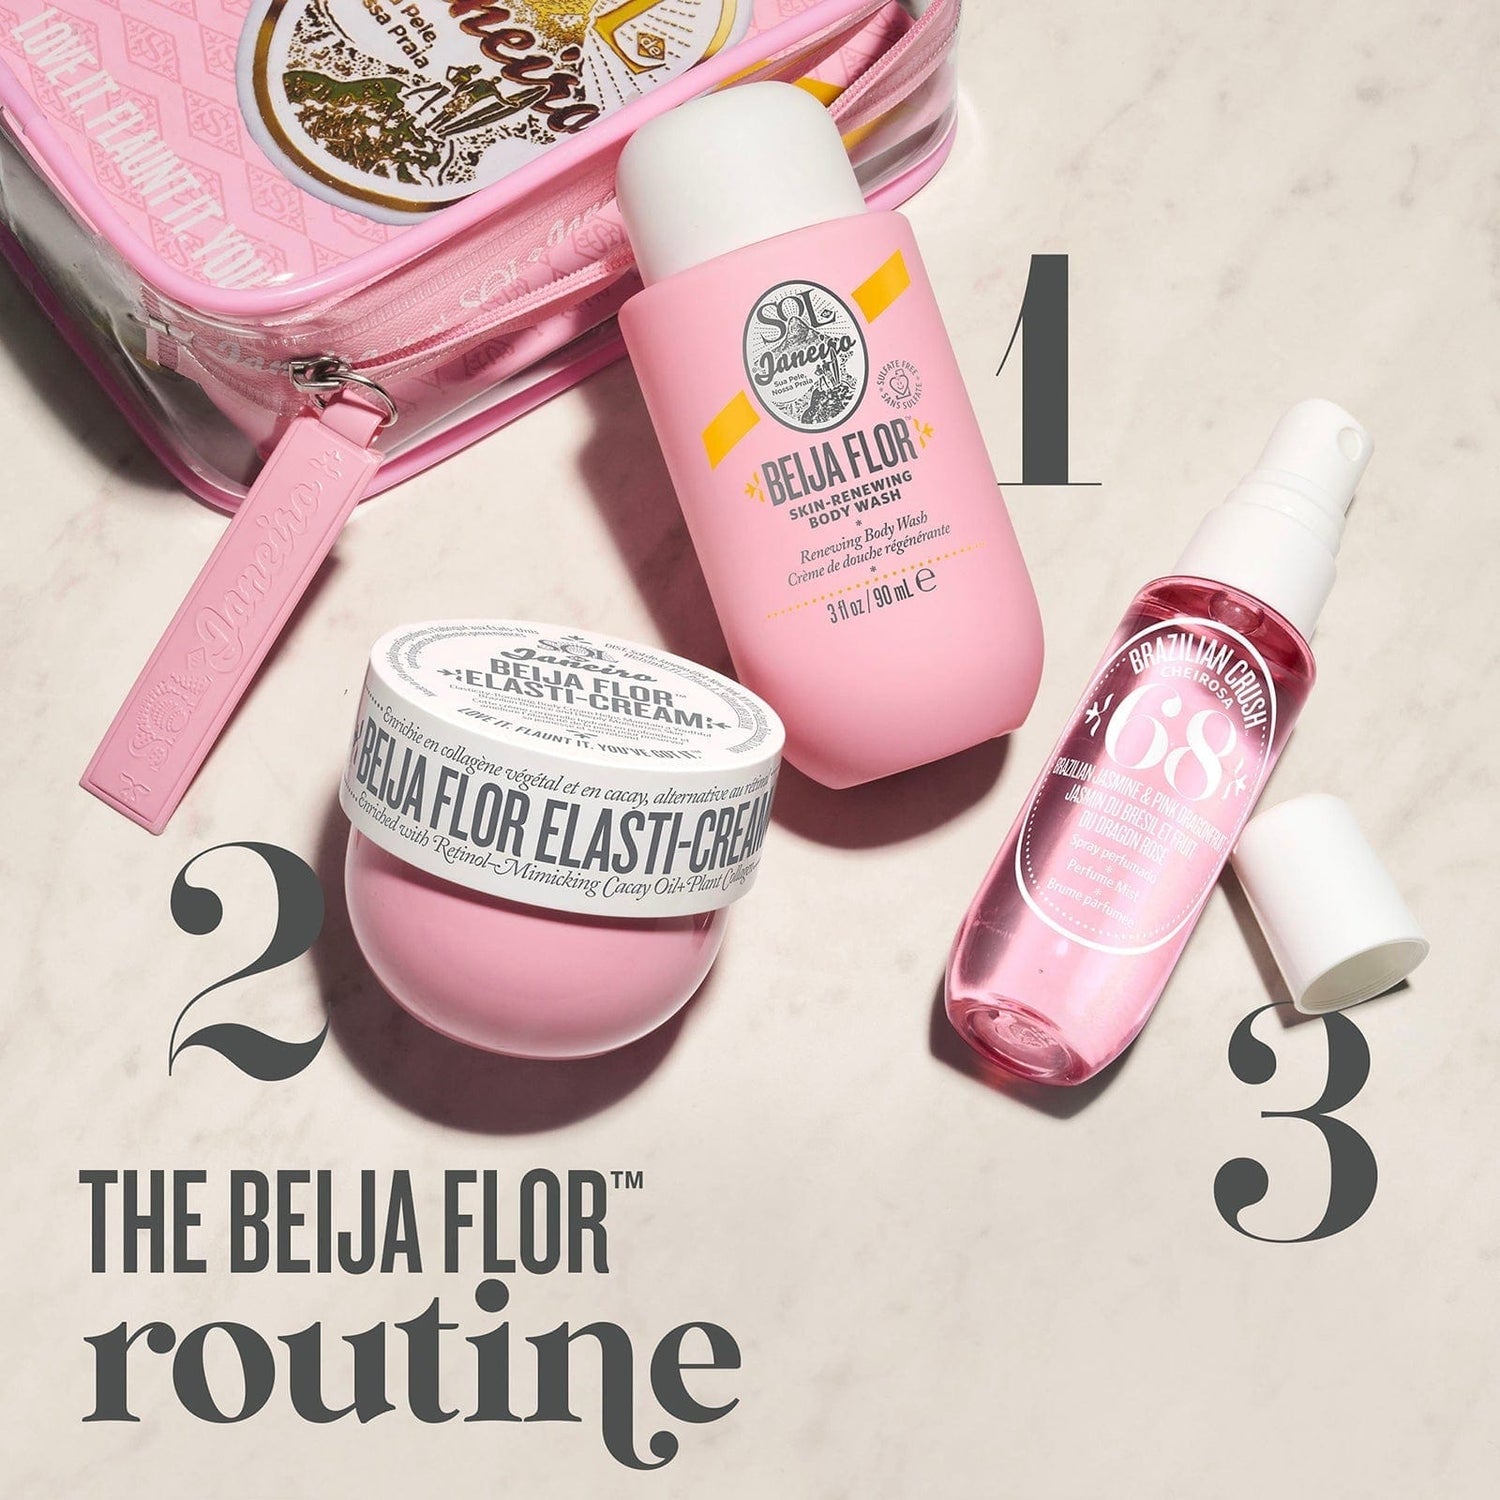 The beija flor routine